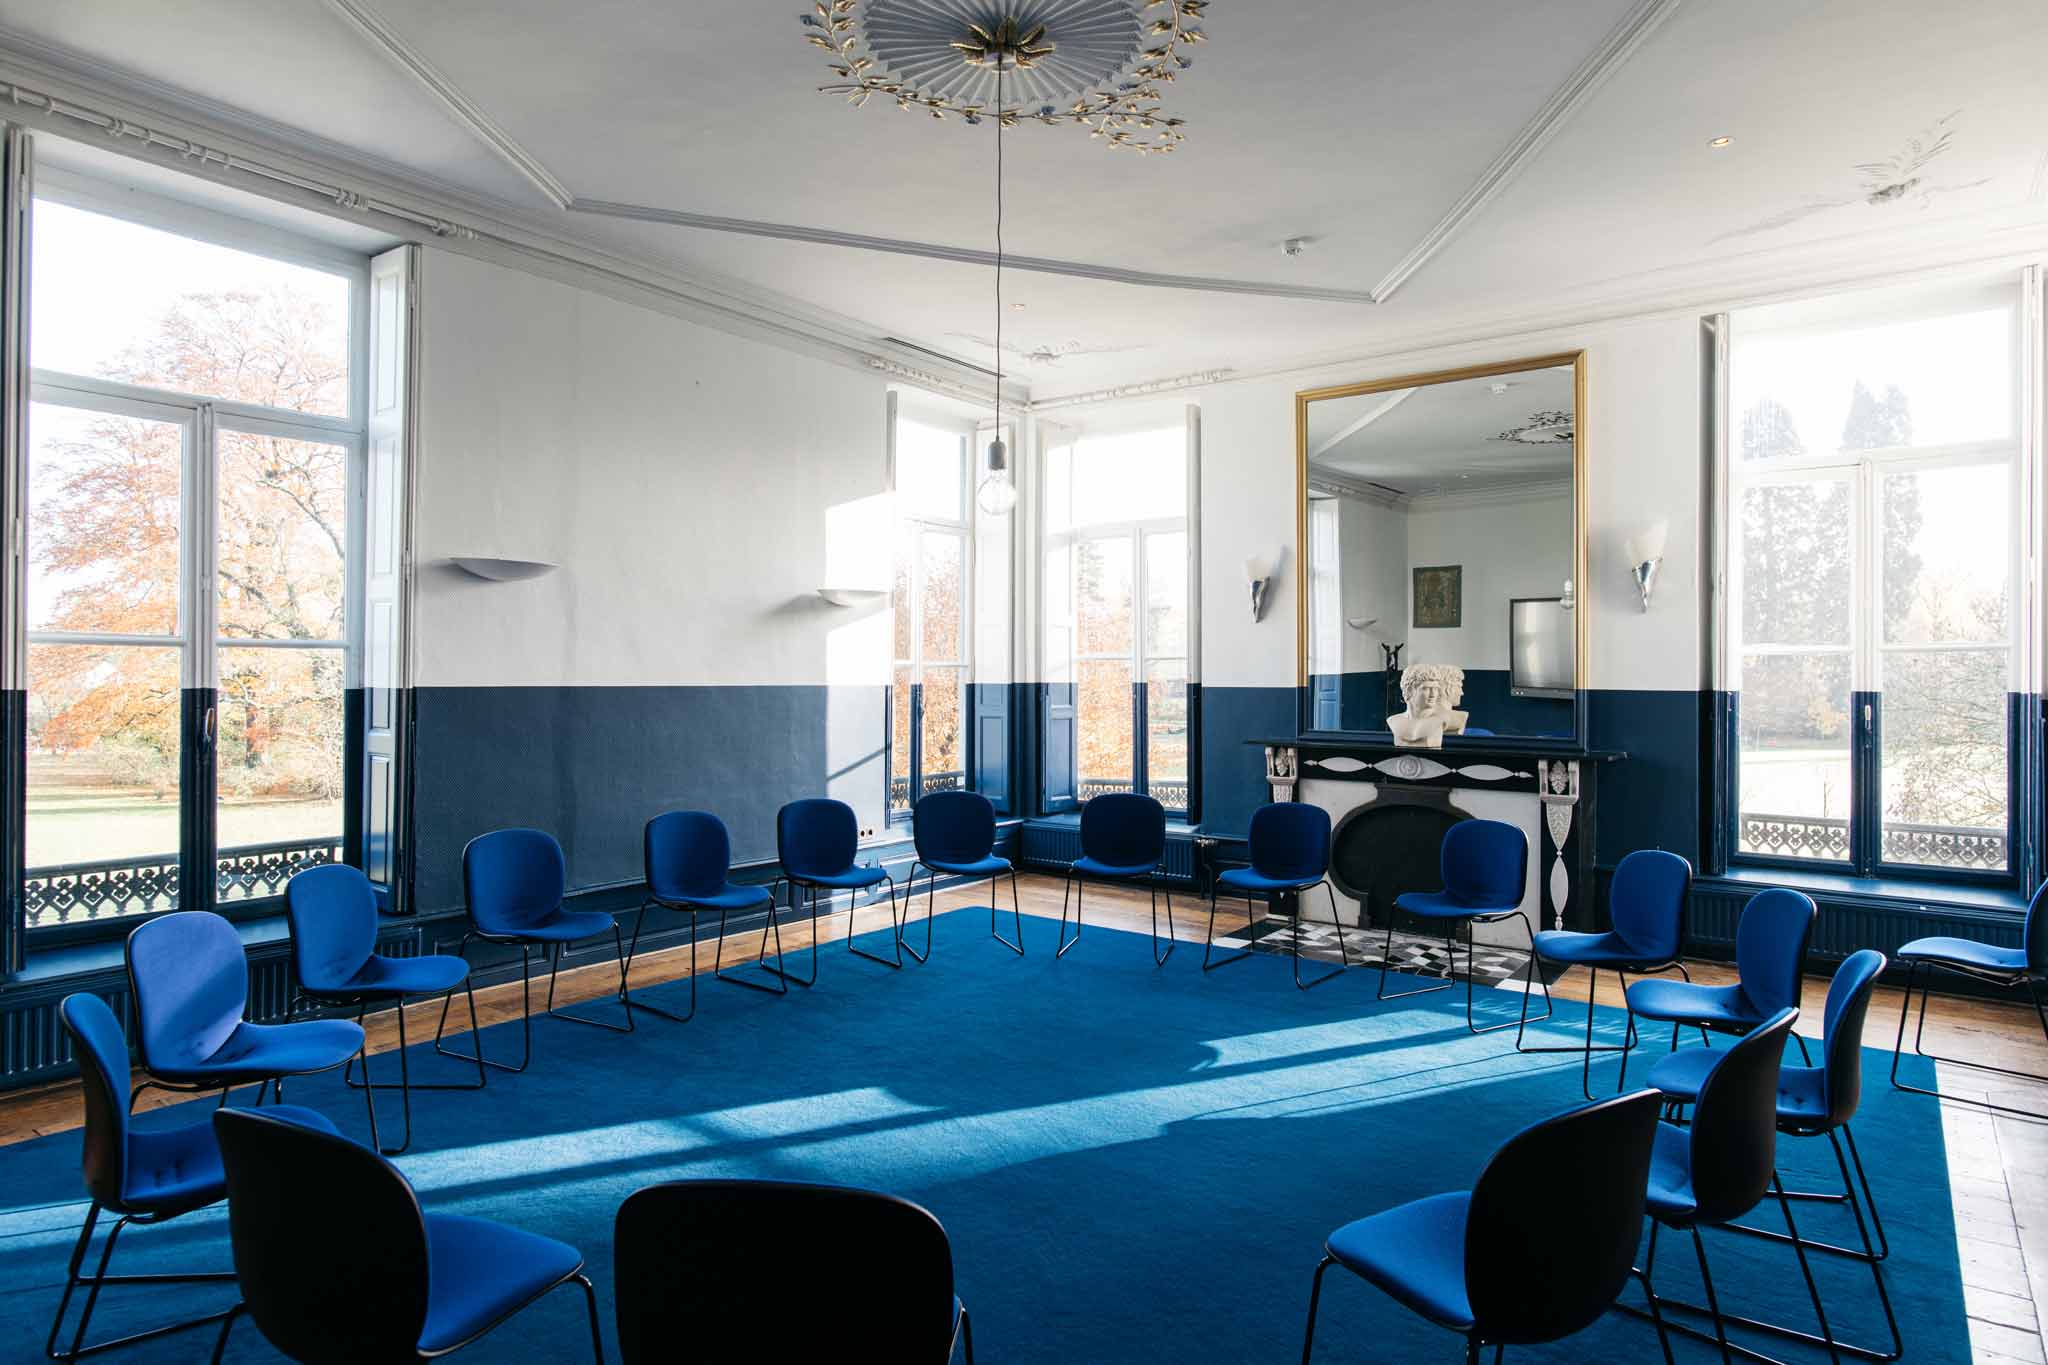 Blue RBM Noor chairs in meeting room at Vaeshartelt hotel in Netherlands